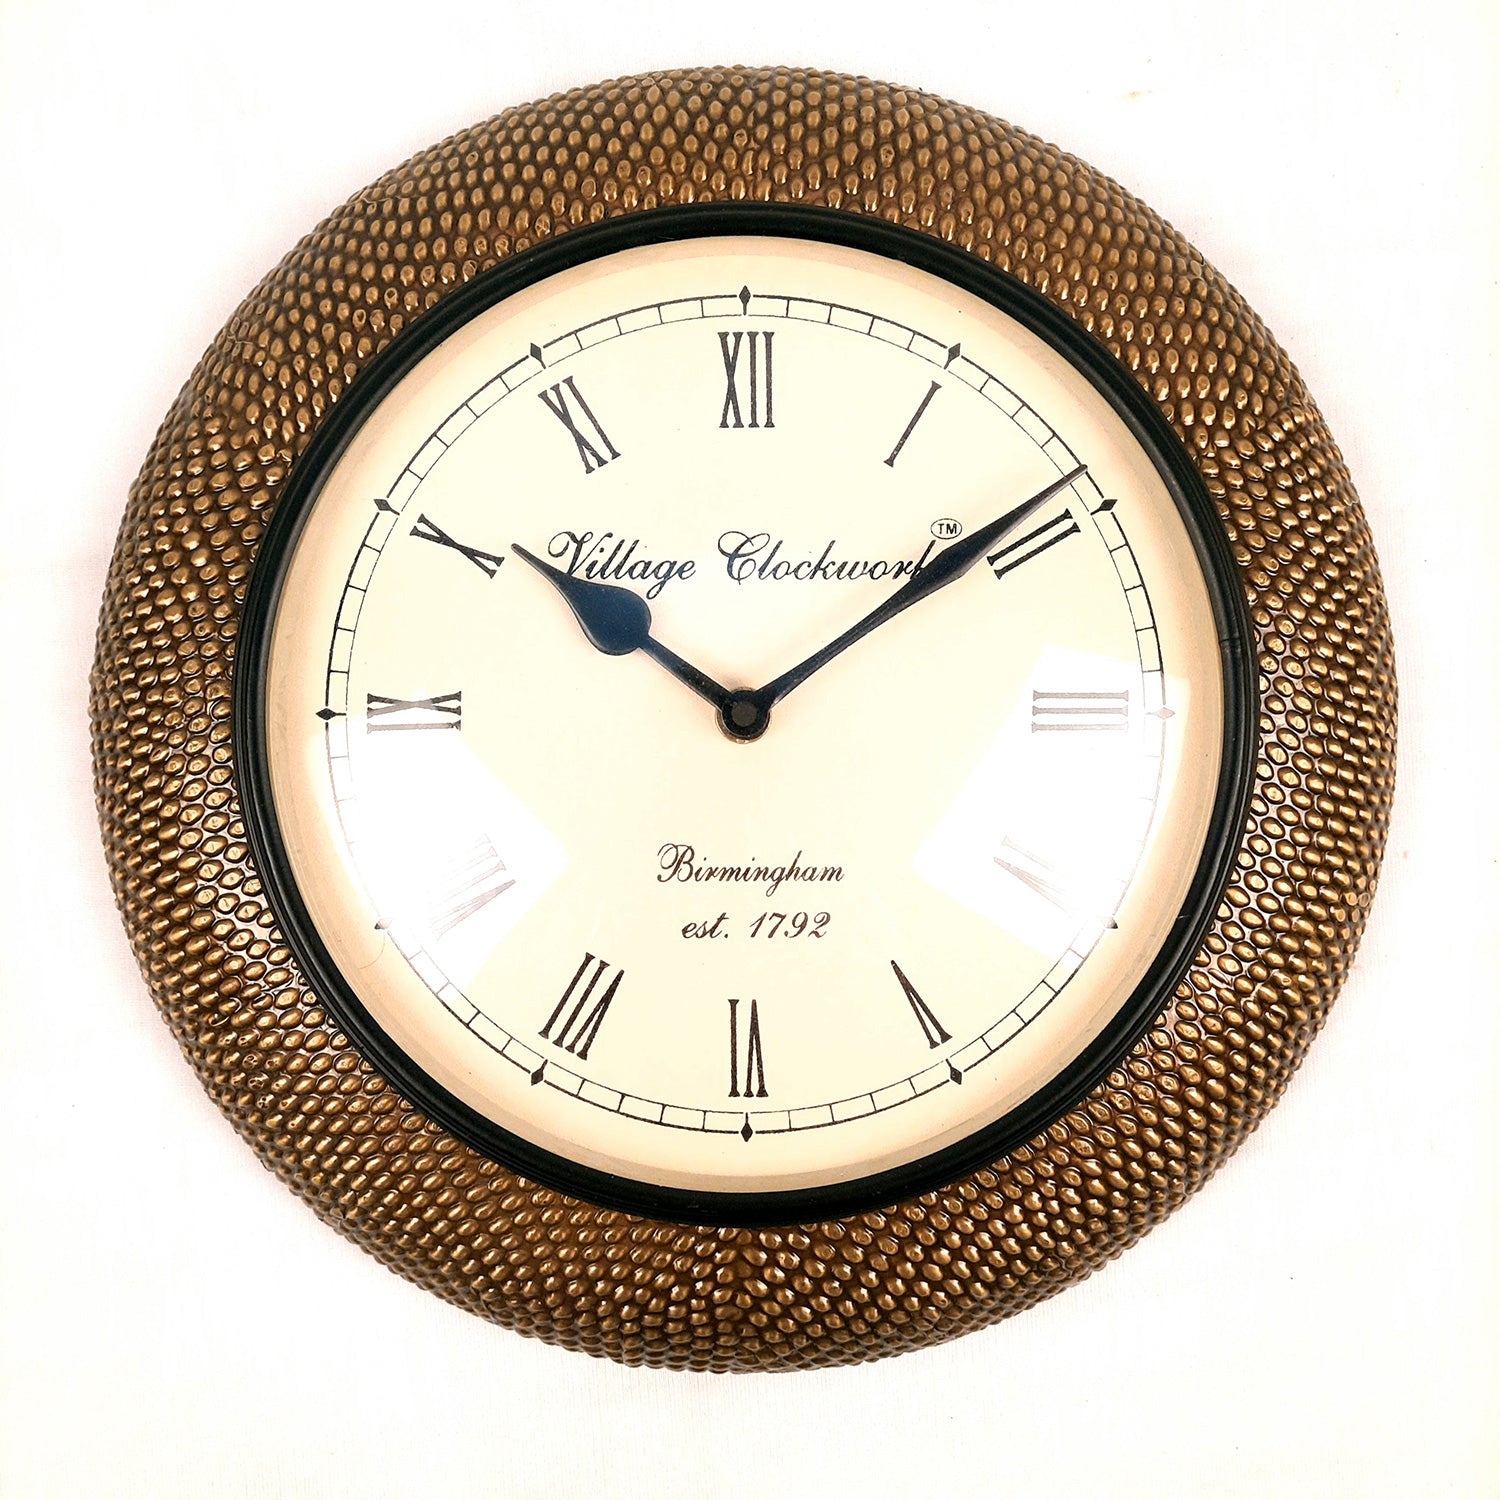 Shop Royal Wall Clocks - Ideal Housewarming Gifts